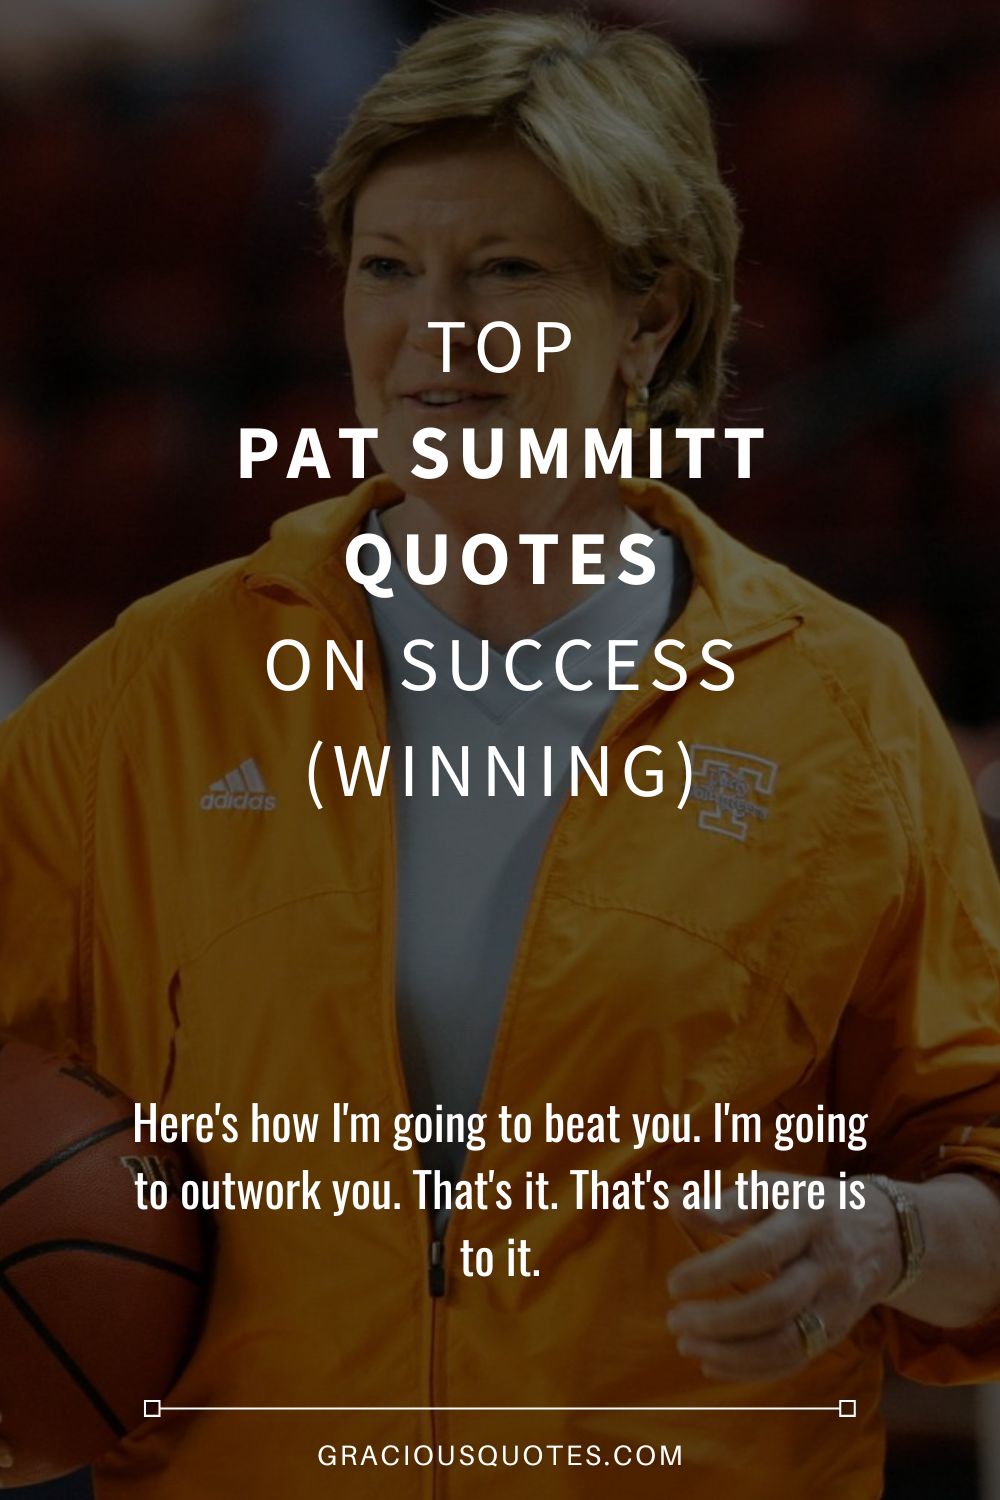 Top Pat Summitt Quotes on Success (WINNING) - Gracious Quotes